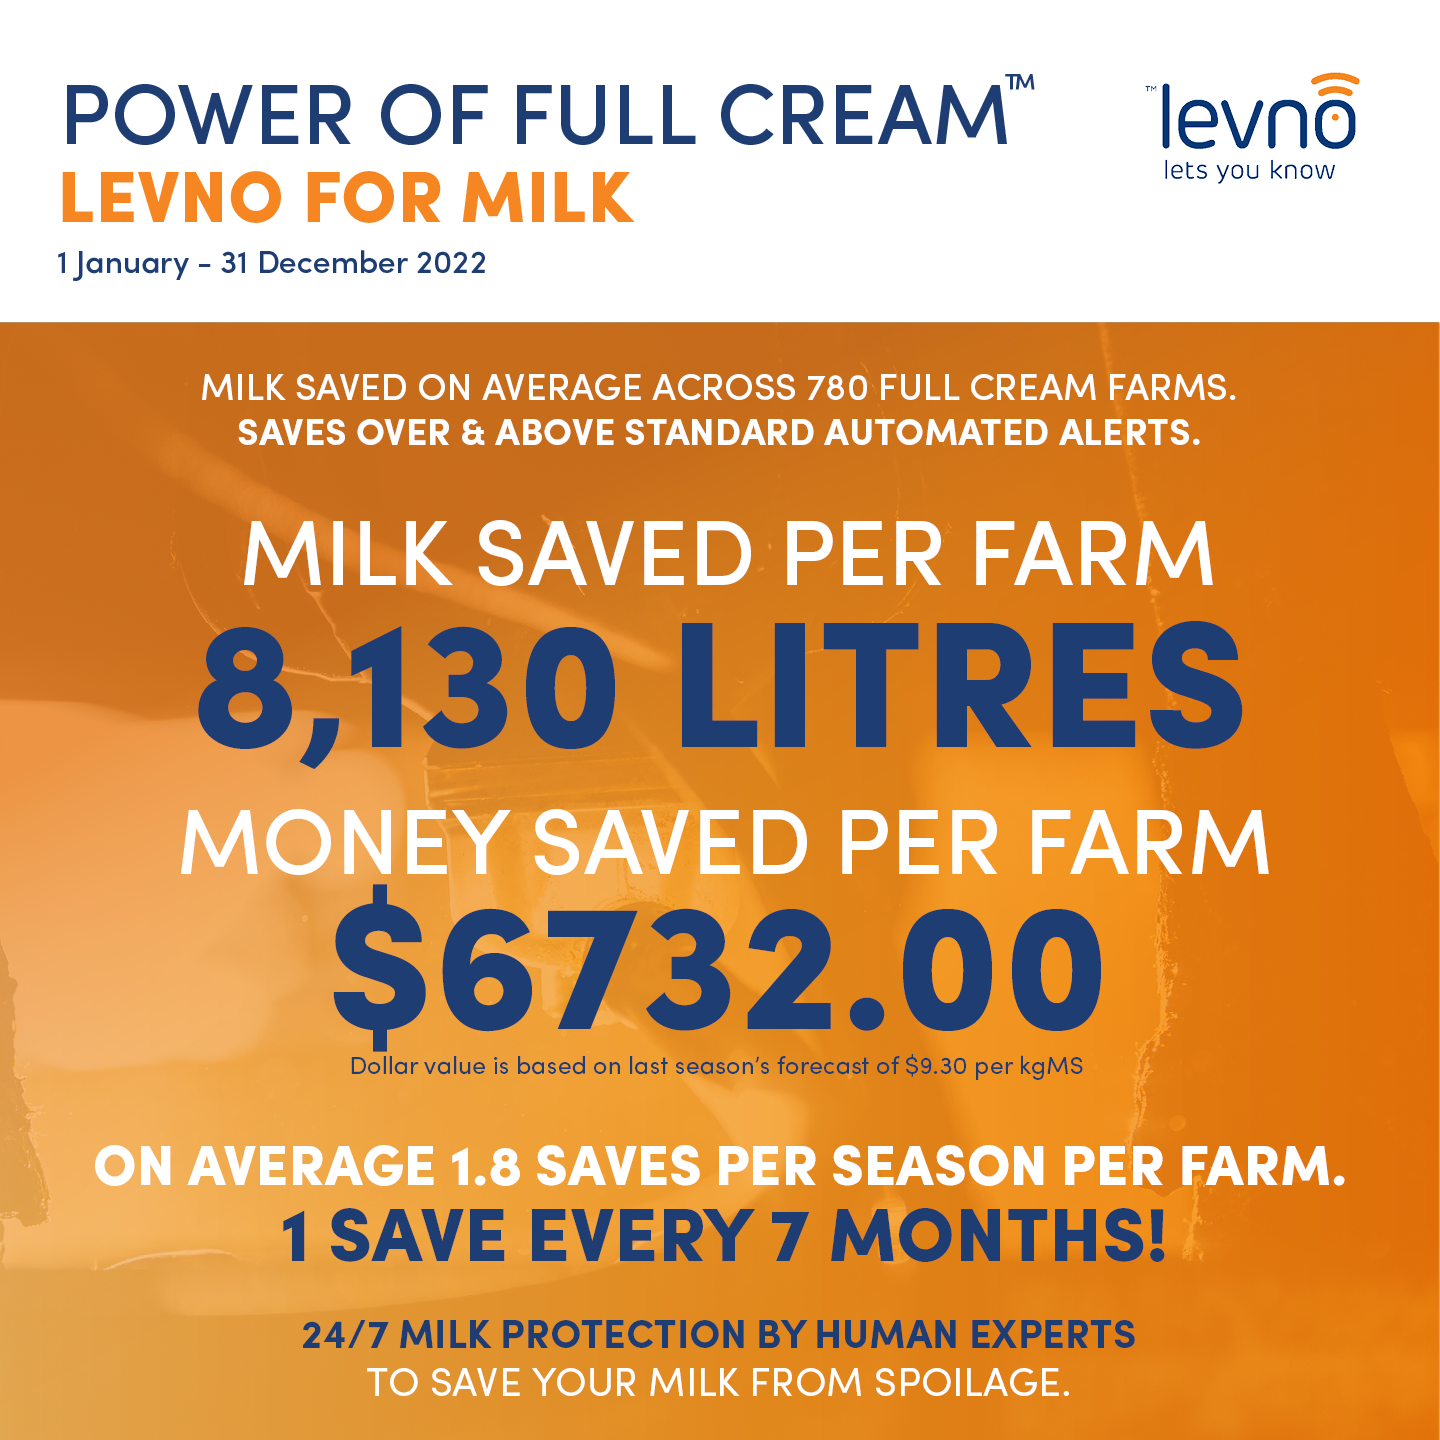 Statistics that prove the Power of Full Cream. Across 780 Farms, Full Cream saved 4517 Litres of Milk per farm. 